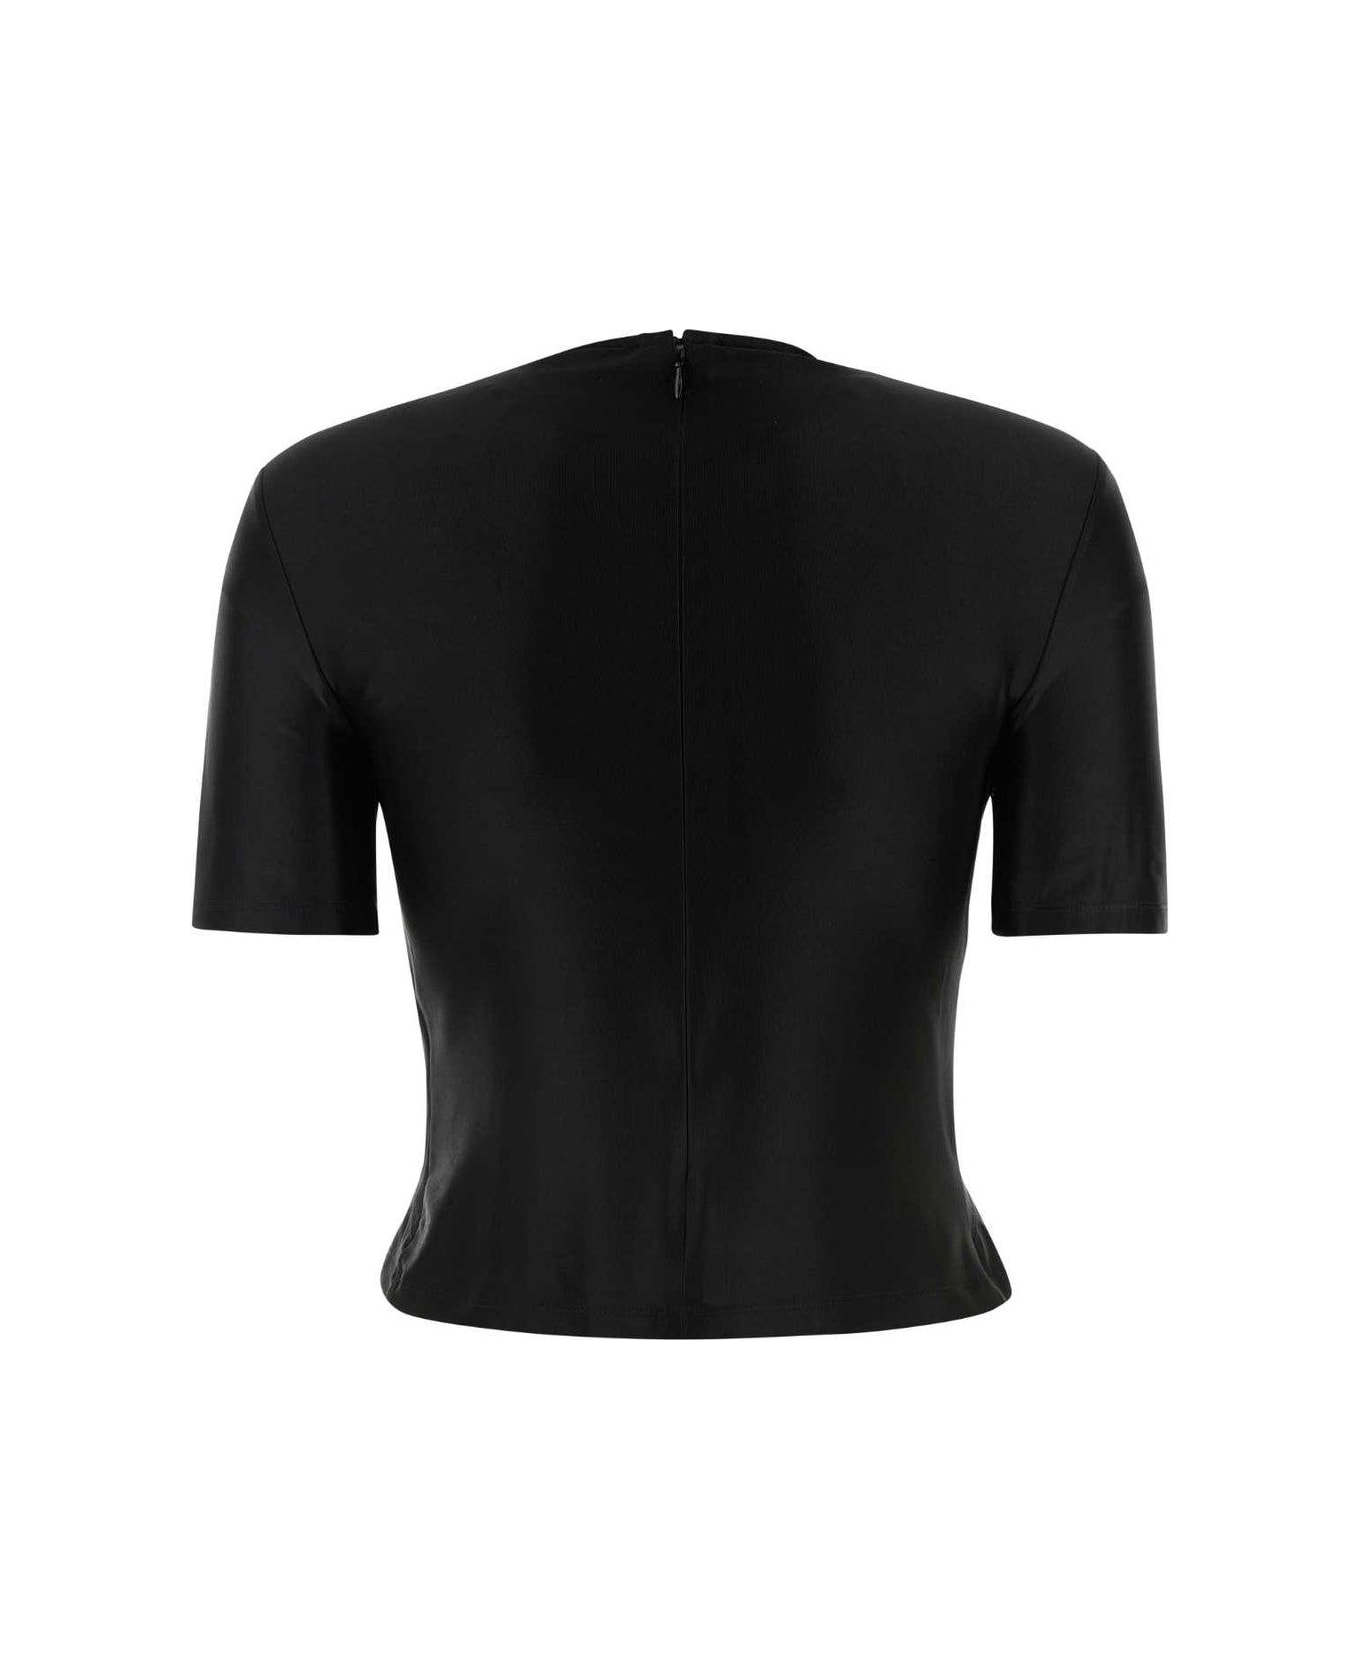 Paco Rabanne Embellished Draped Mock Neck Top - Black Tシャツ